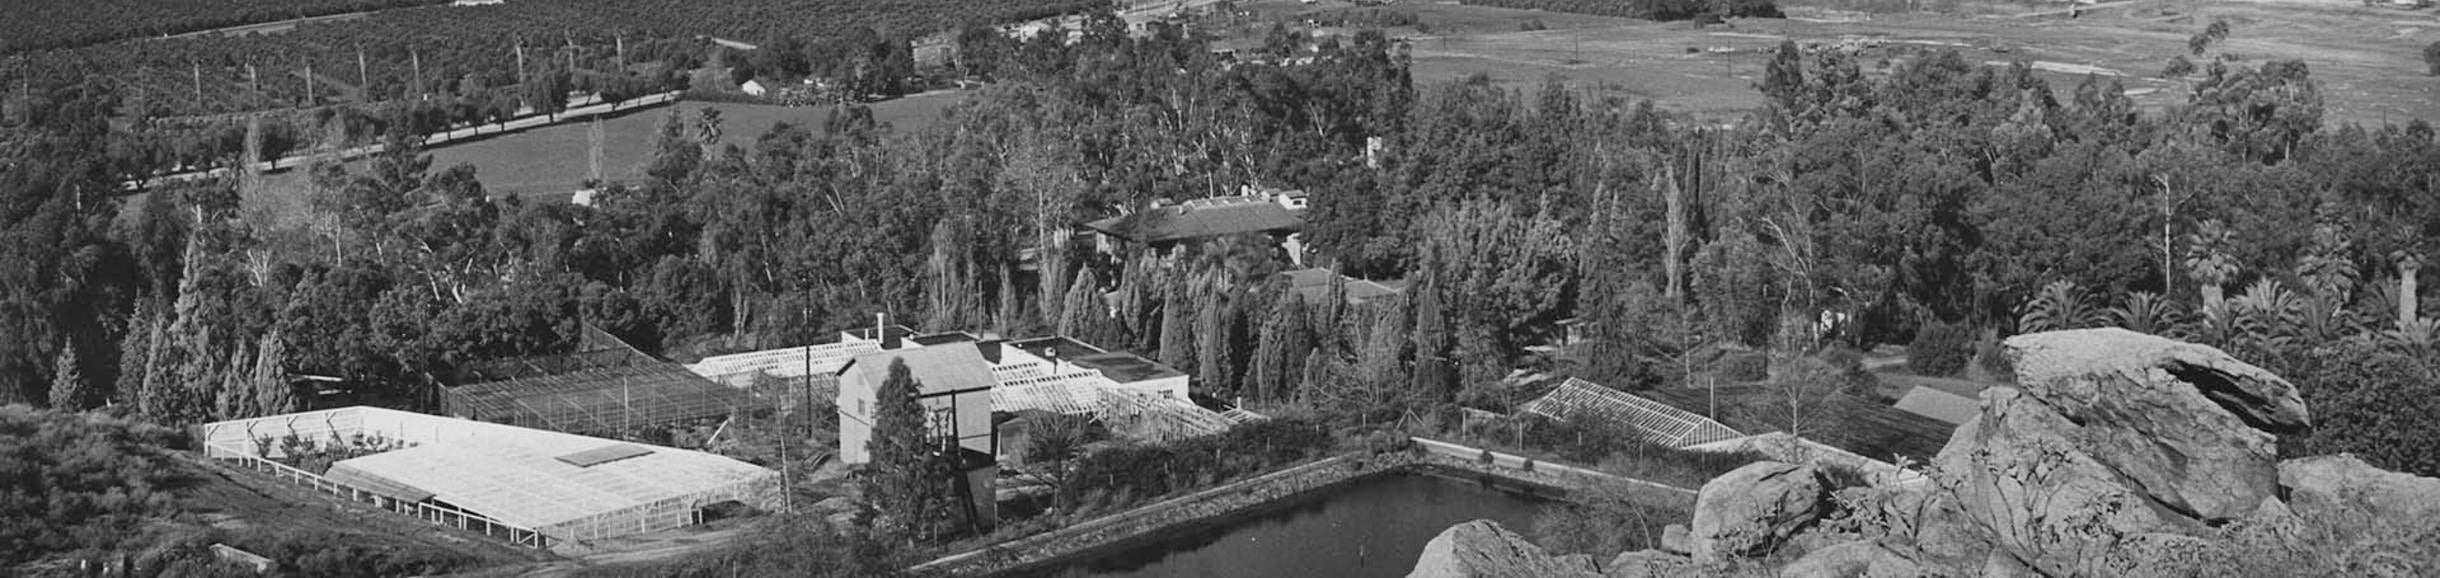 UC Riverside historic image